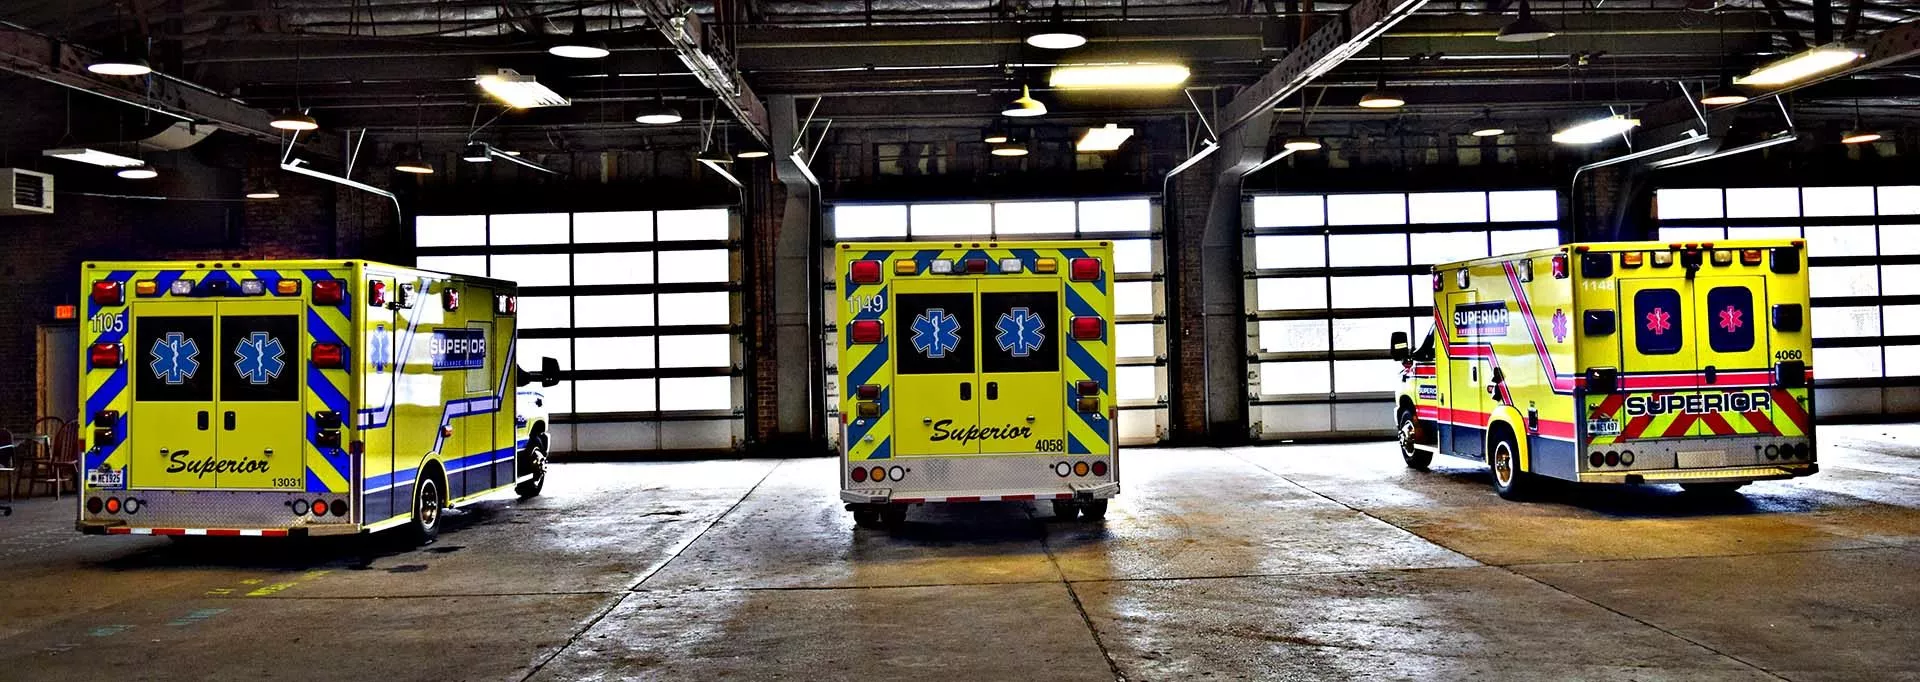 Indiana three ambulances 1920x680